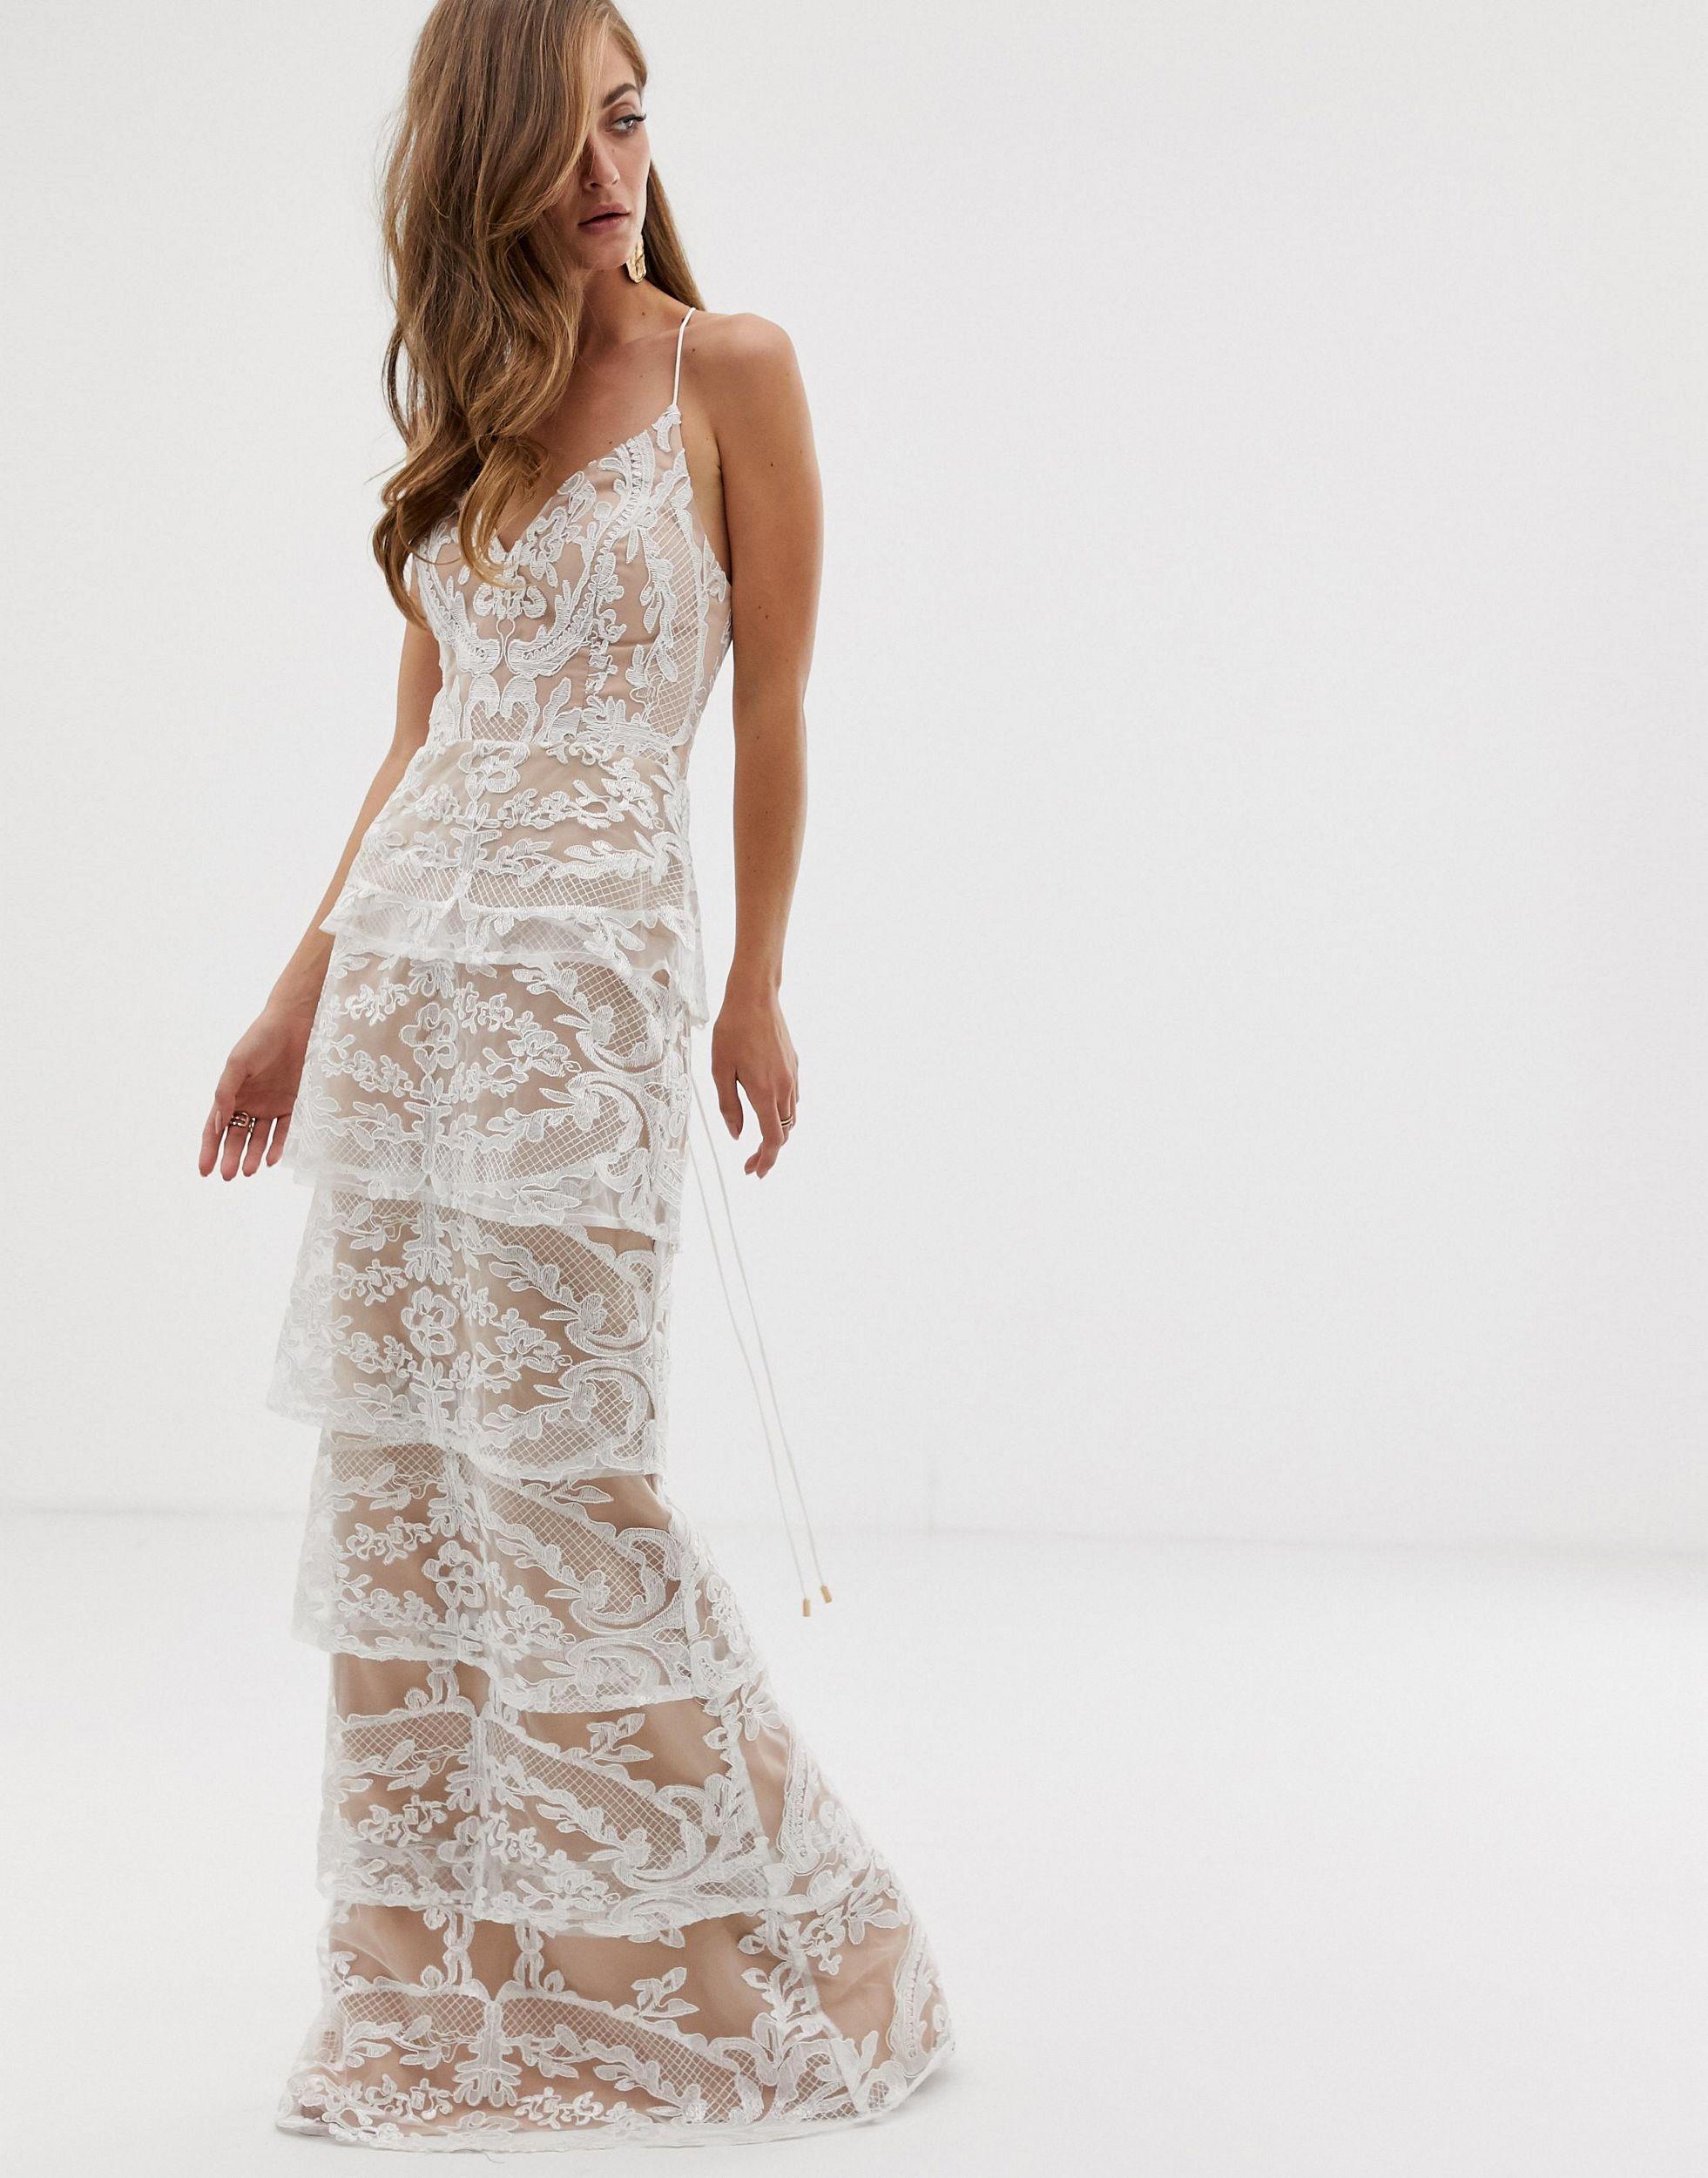 contrast lace flowy dress